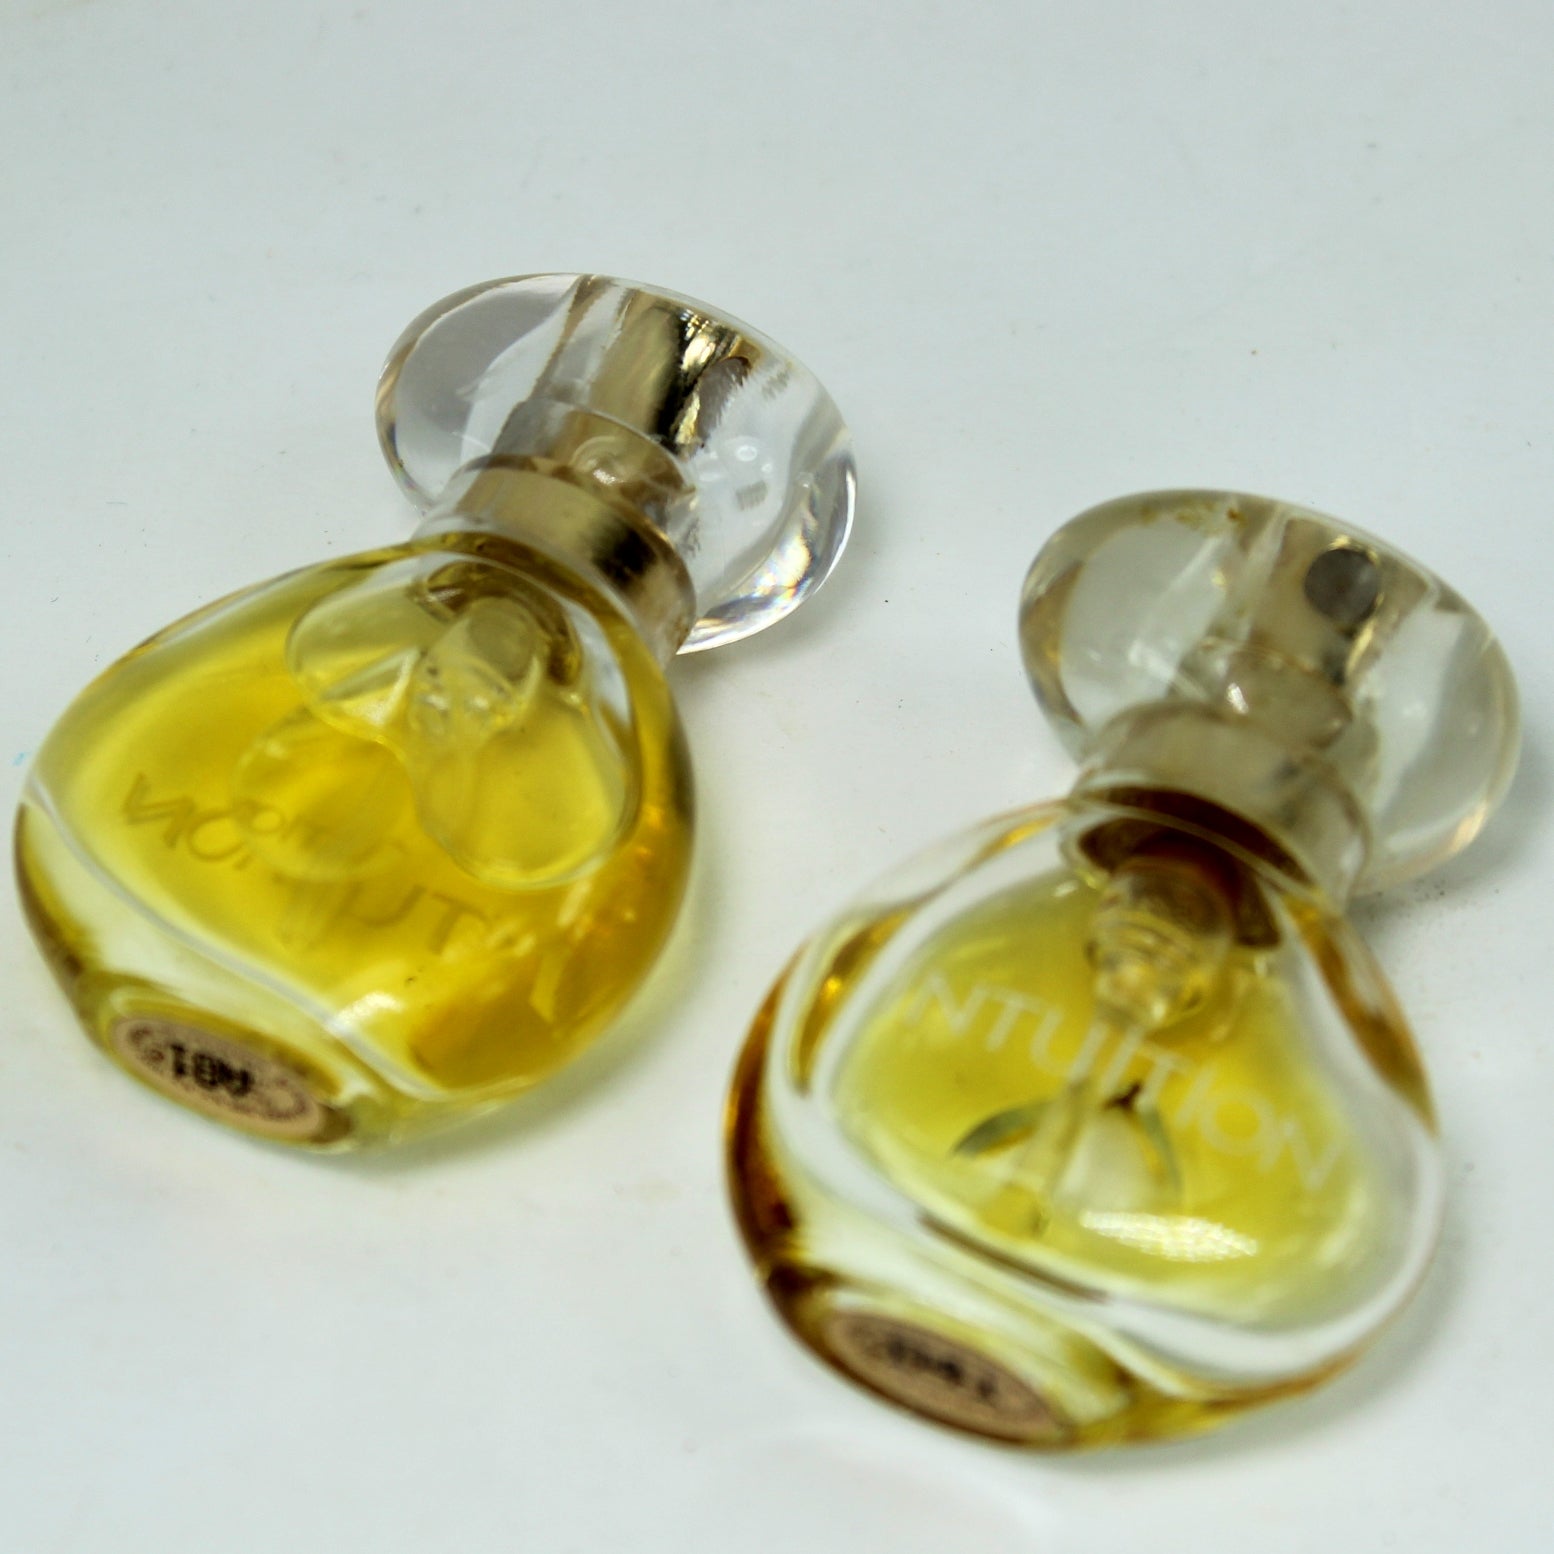 Estee Lauder Intuition 2 EDP 1/4 oz 2" Mini Size 1 Full 1 Partial collectible mini bottles usable perfume